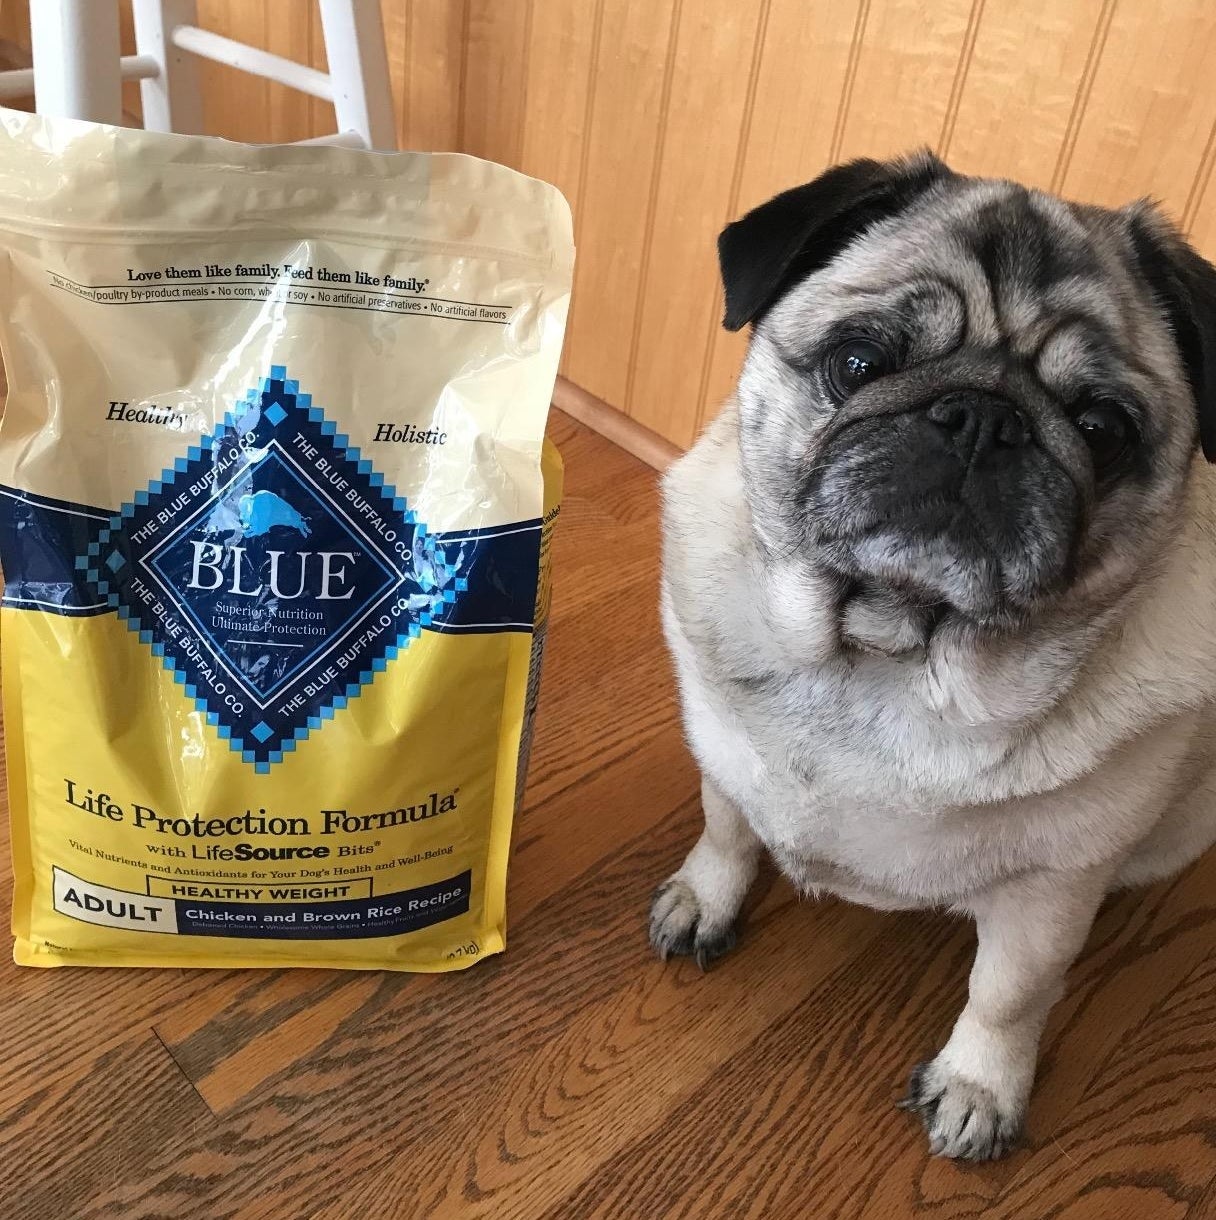 The bag of dog food, standing next to a pug